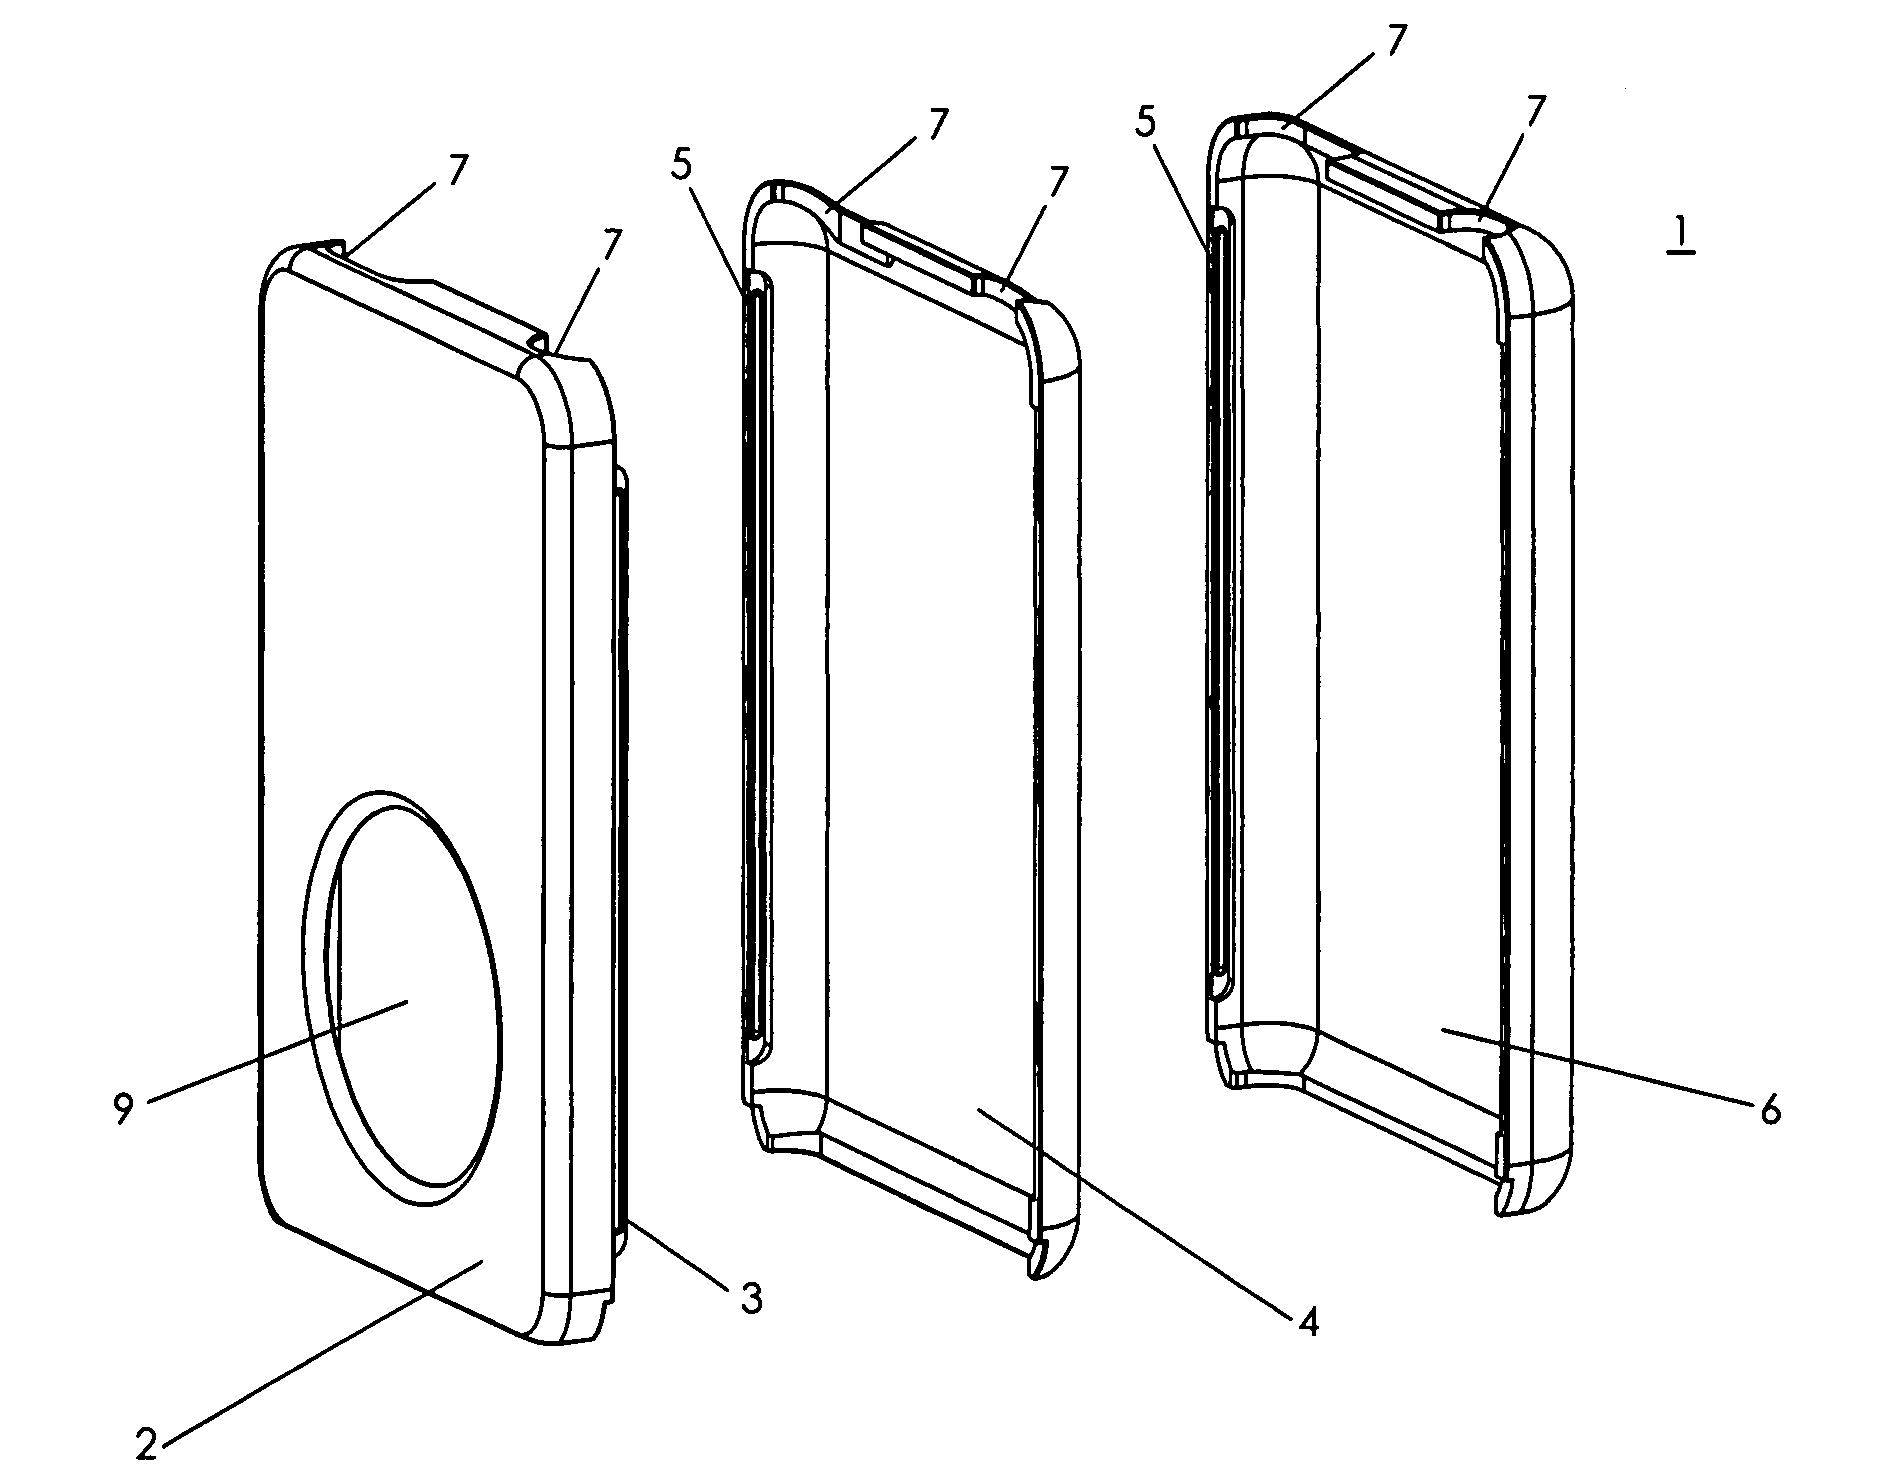 Portable electronic device case configuration